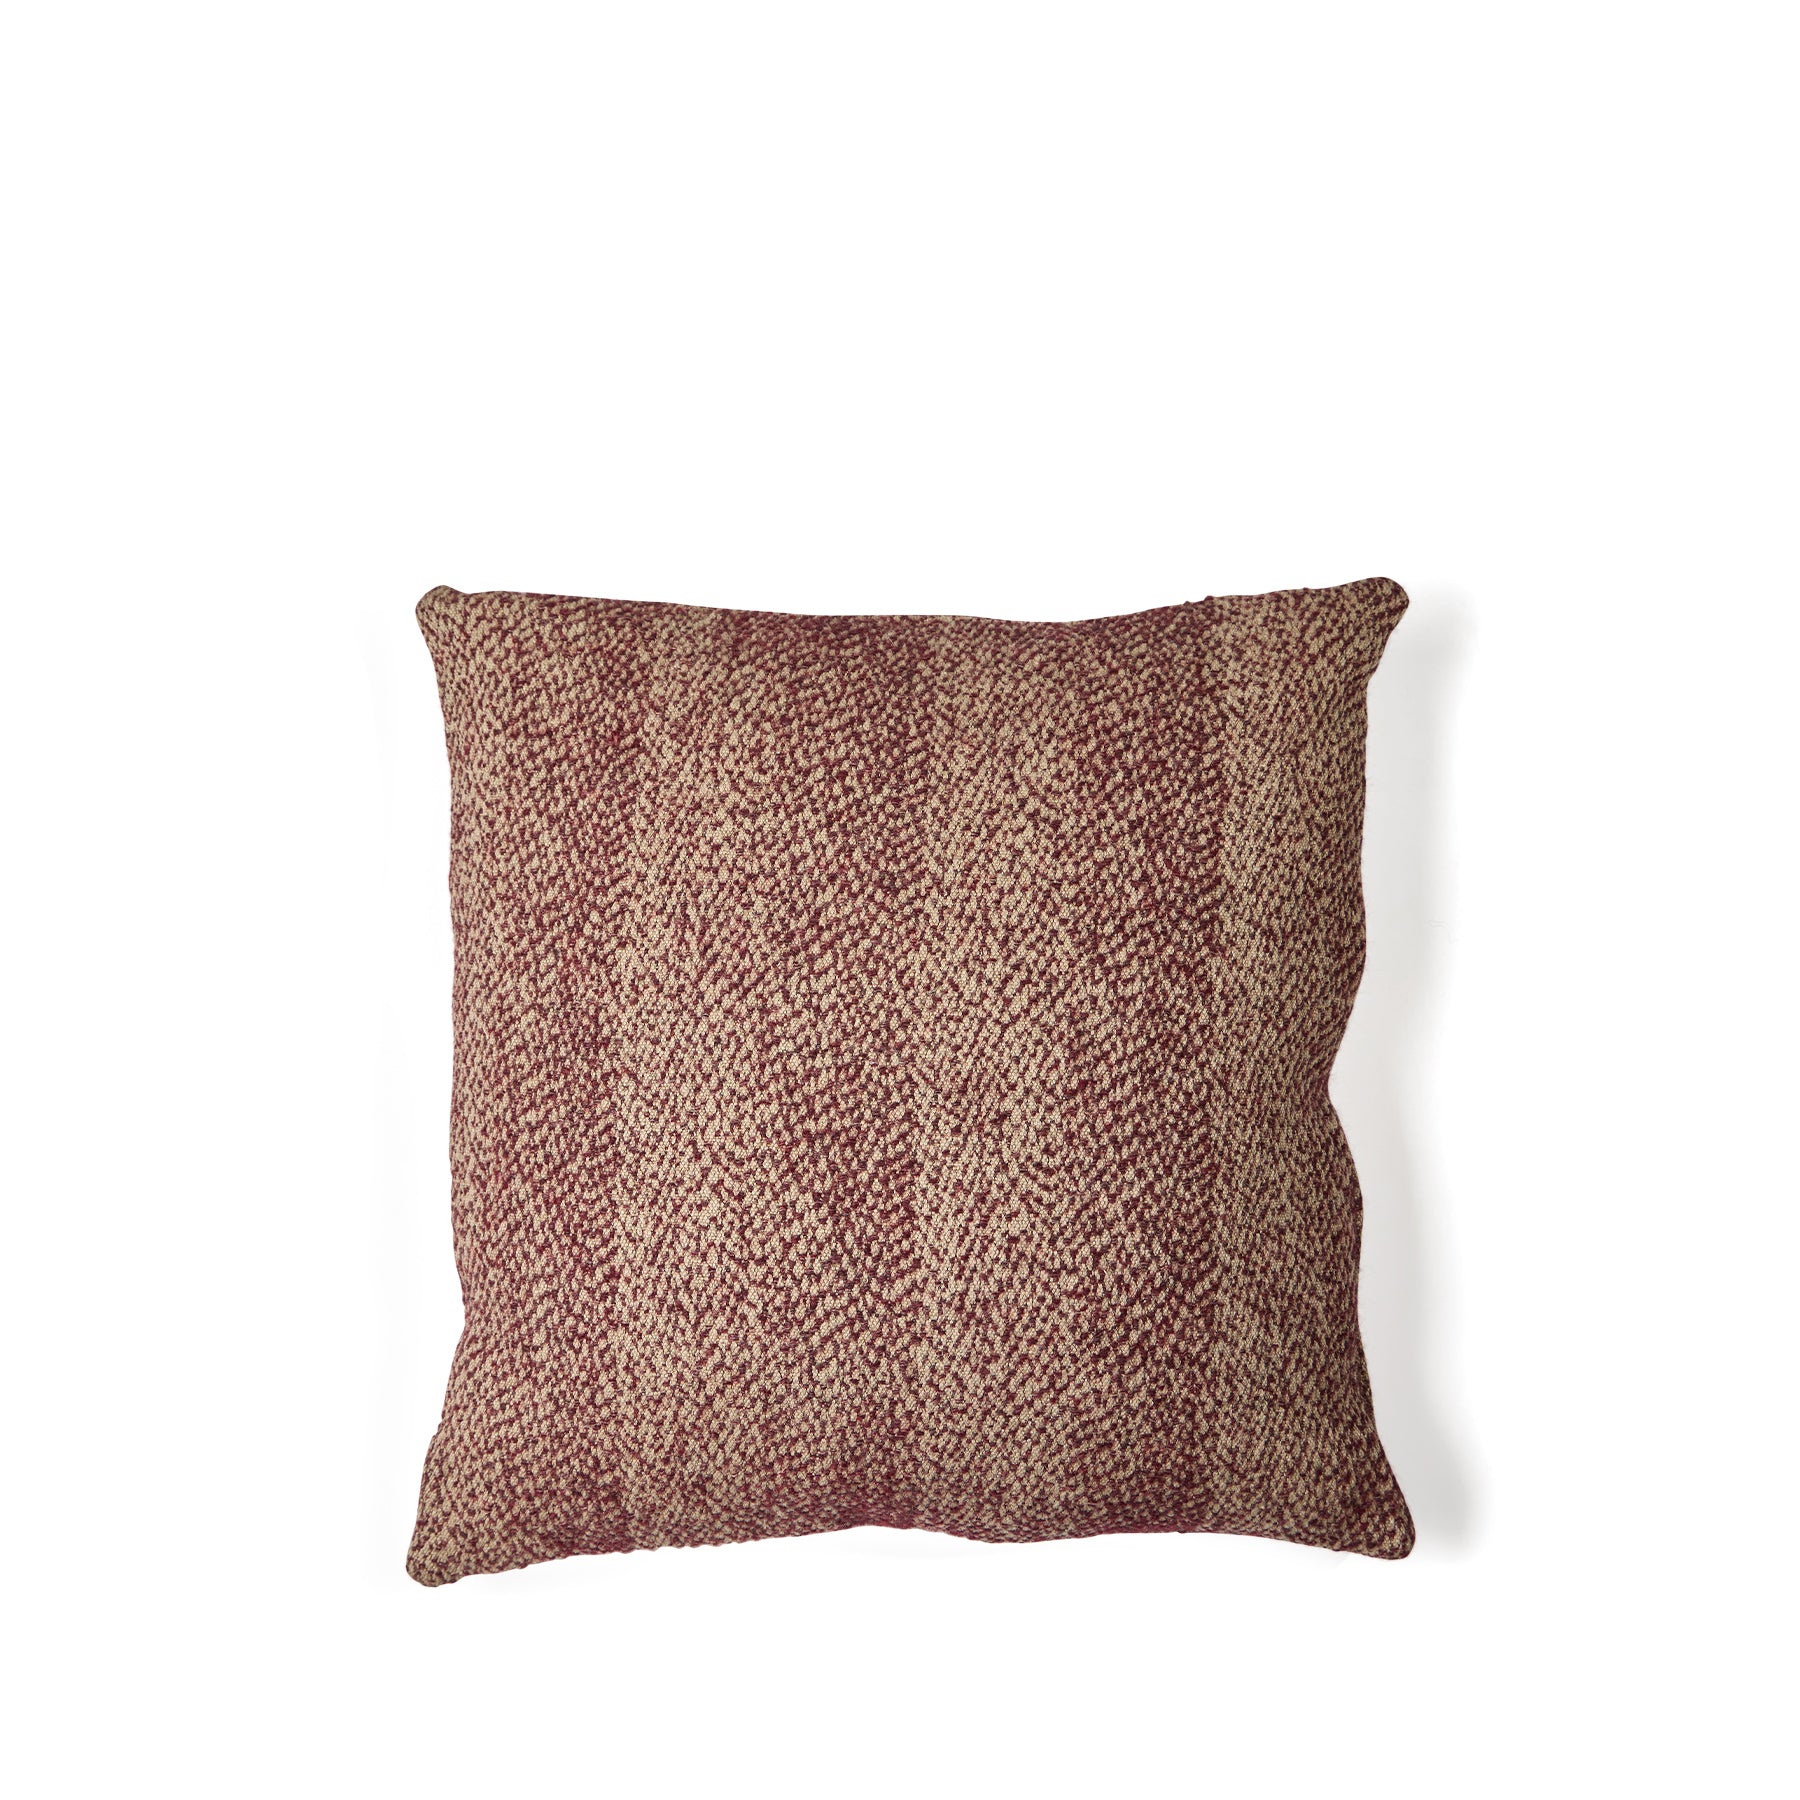 Birch Pillow in Amethyst Zoom Image 1